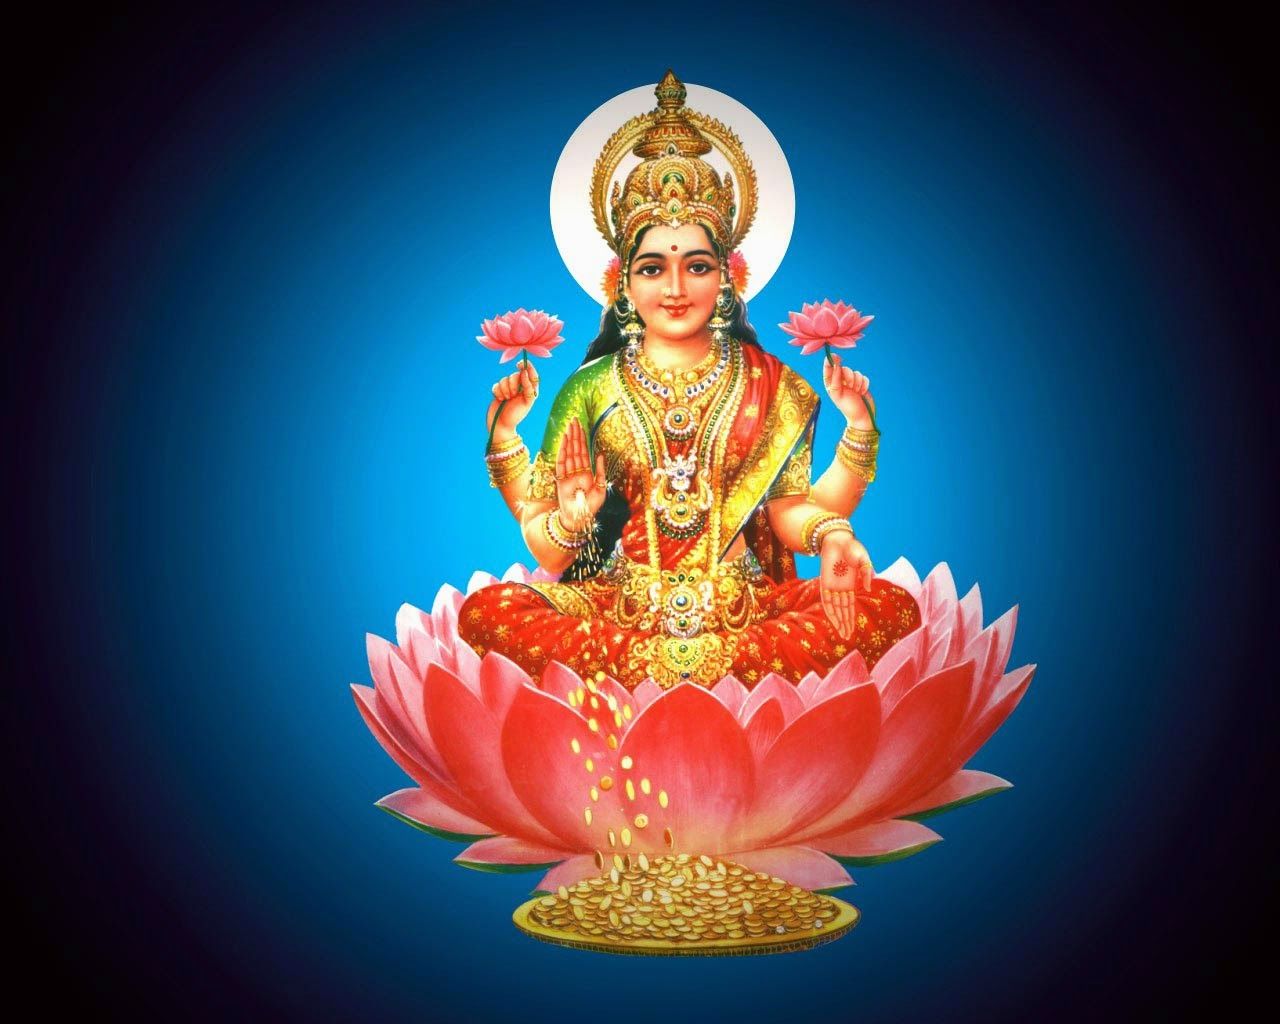 Lakshmi Devi Ammavaru HD wallpaper Image Picture photo Gallery Free Download. Hindu God Image